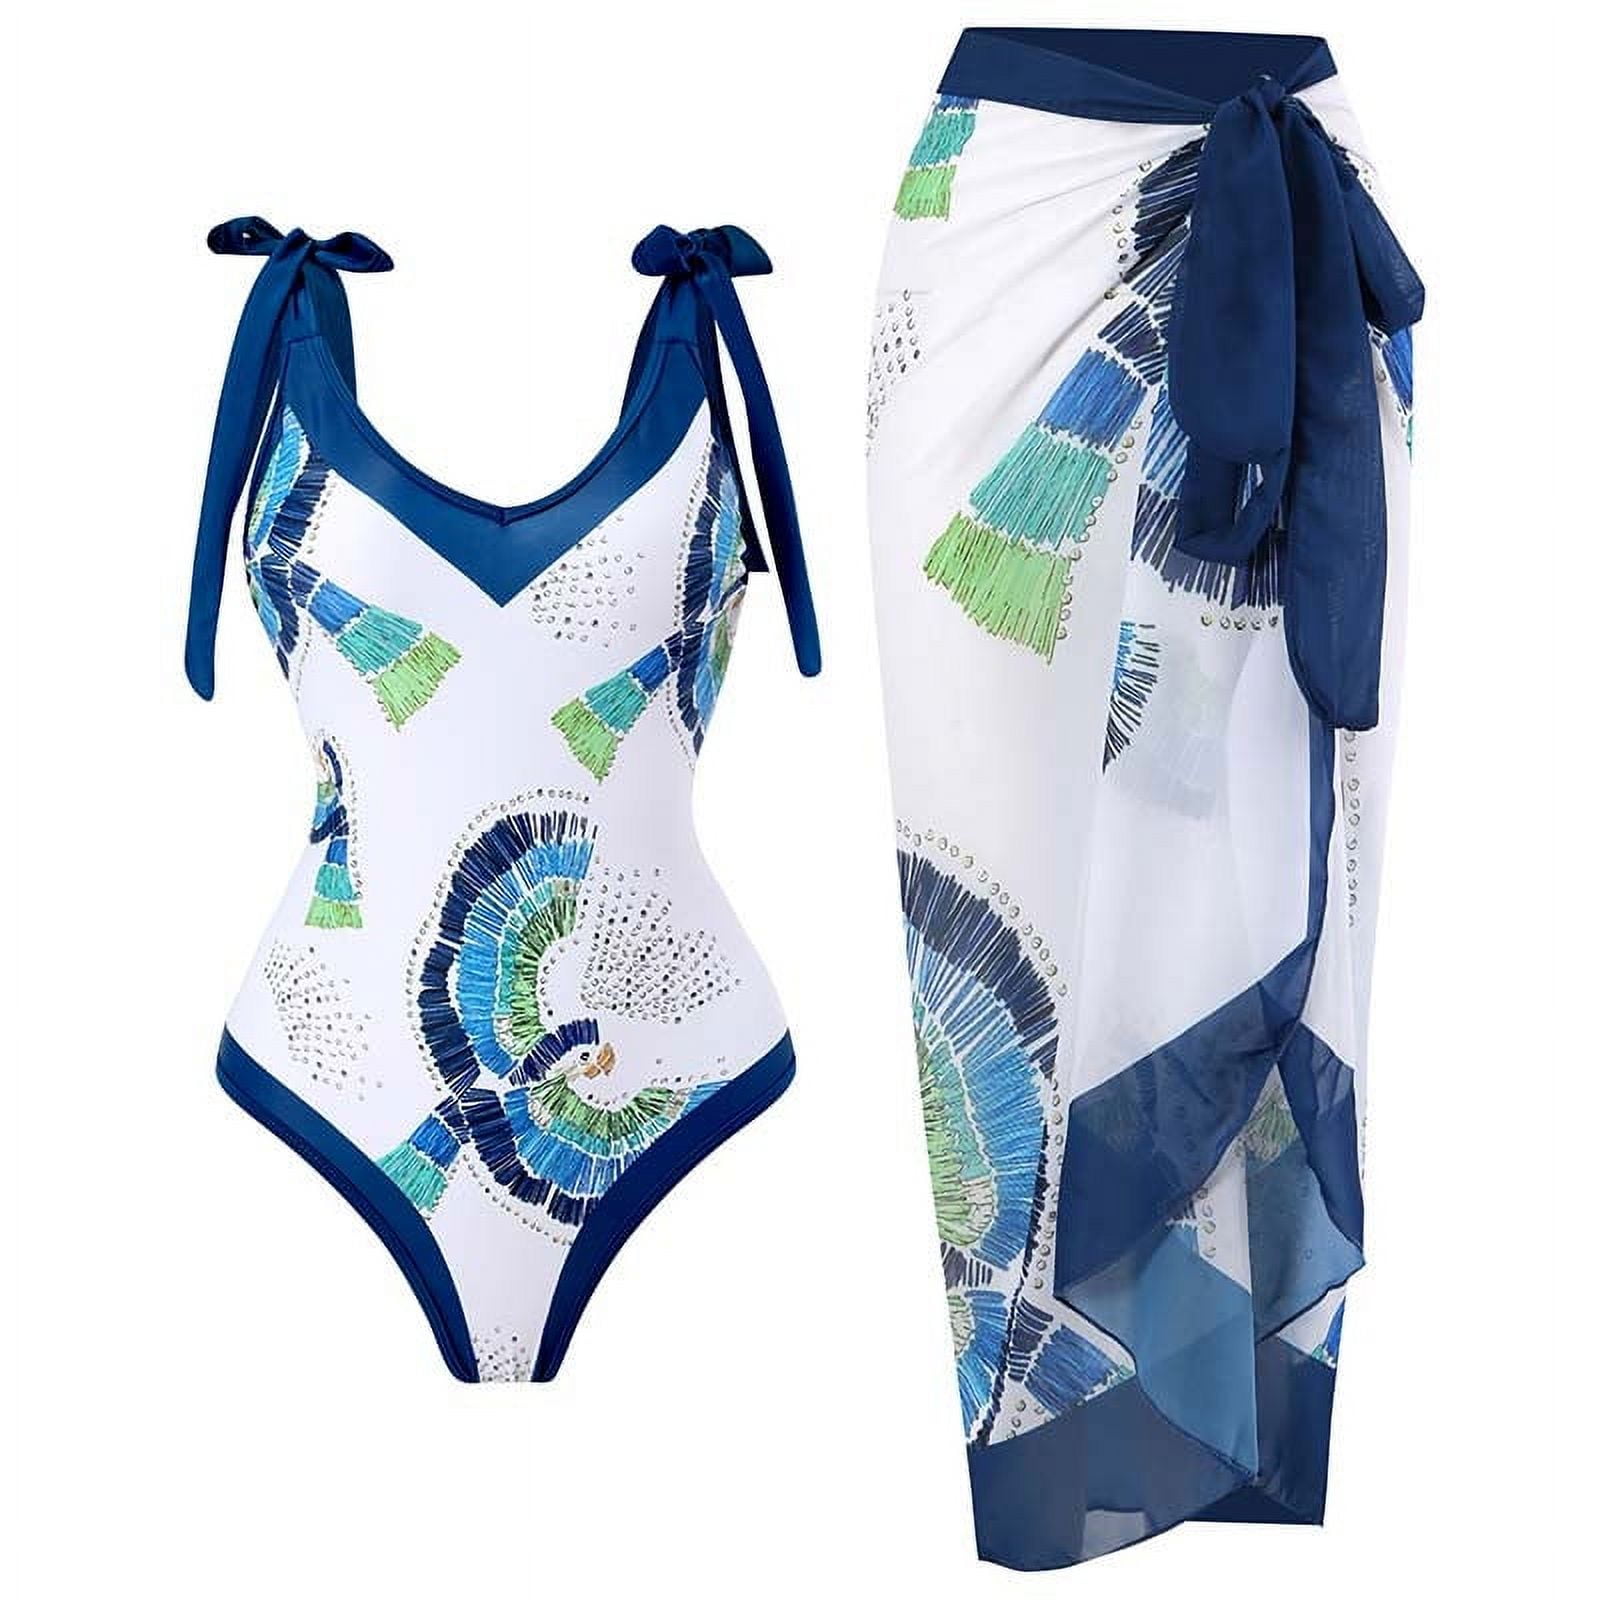 Xihbxyly Swim Suits, Women Two Piece Women's Print Bikini Swimsuit